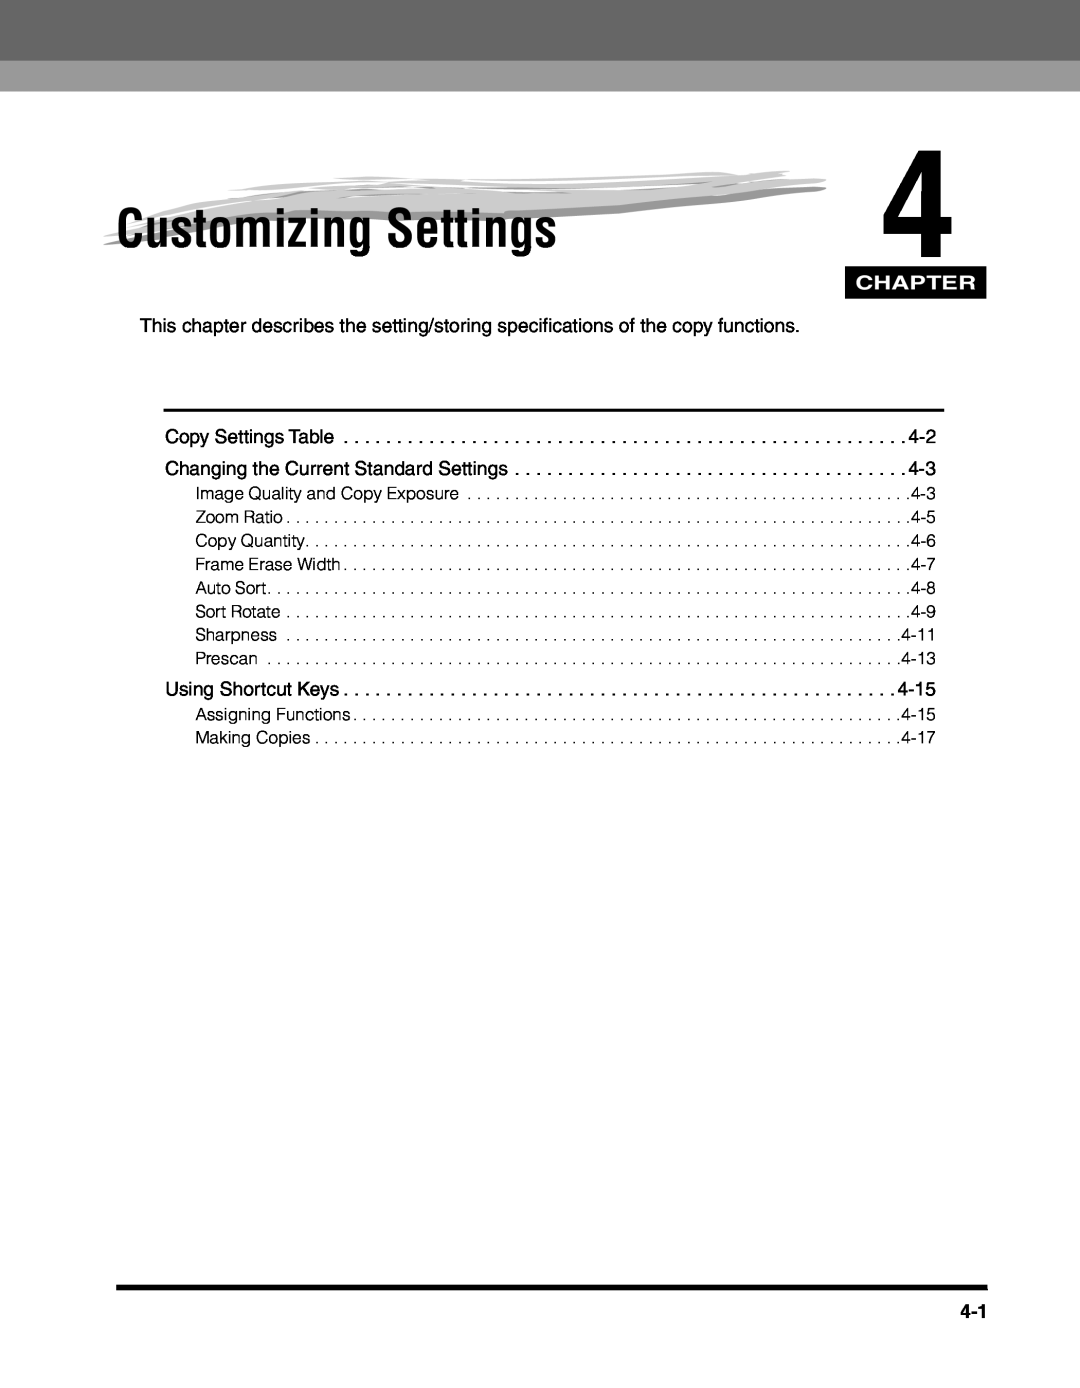 Canon 2010F manual Customizing Settings, Chapter 